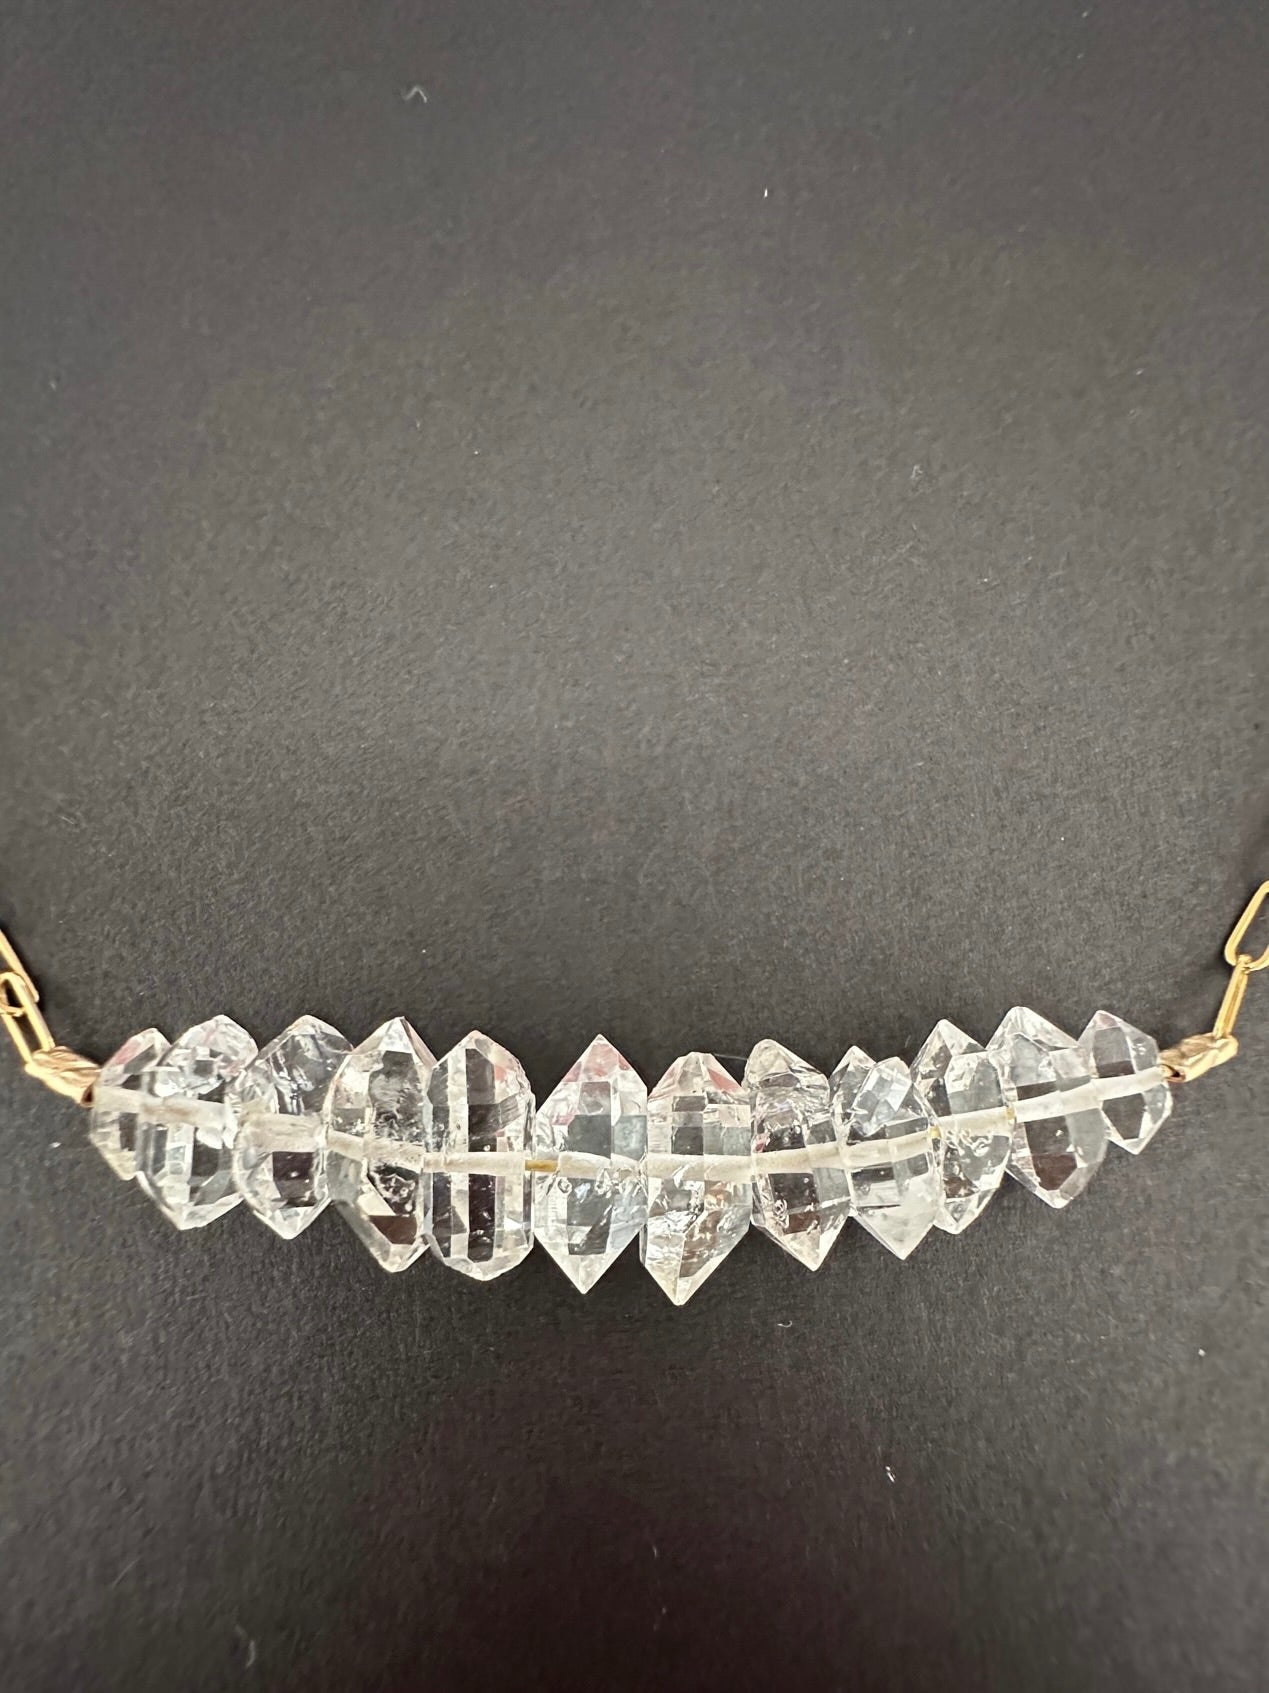 016. 12 Strand Herkimer Diamond Necklace